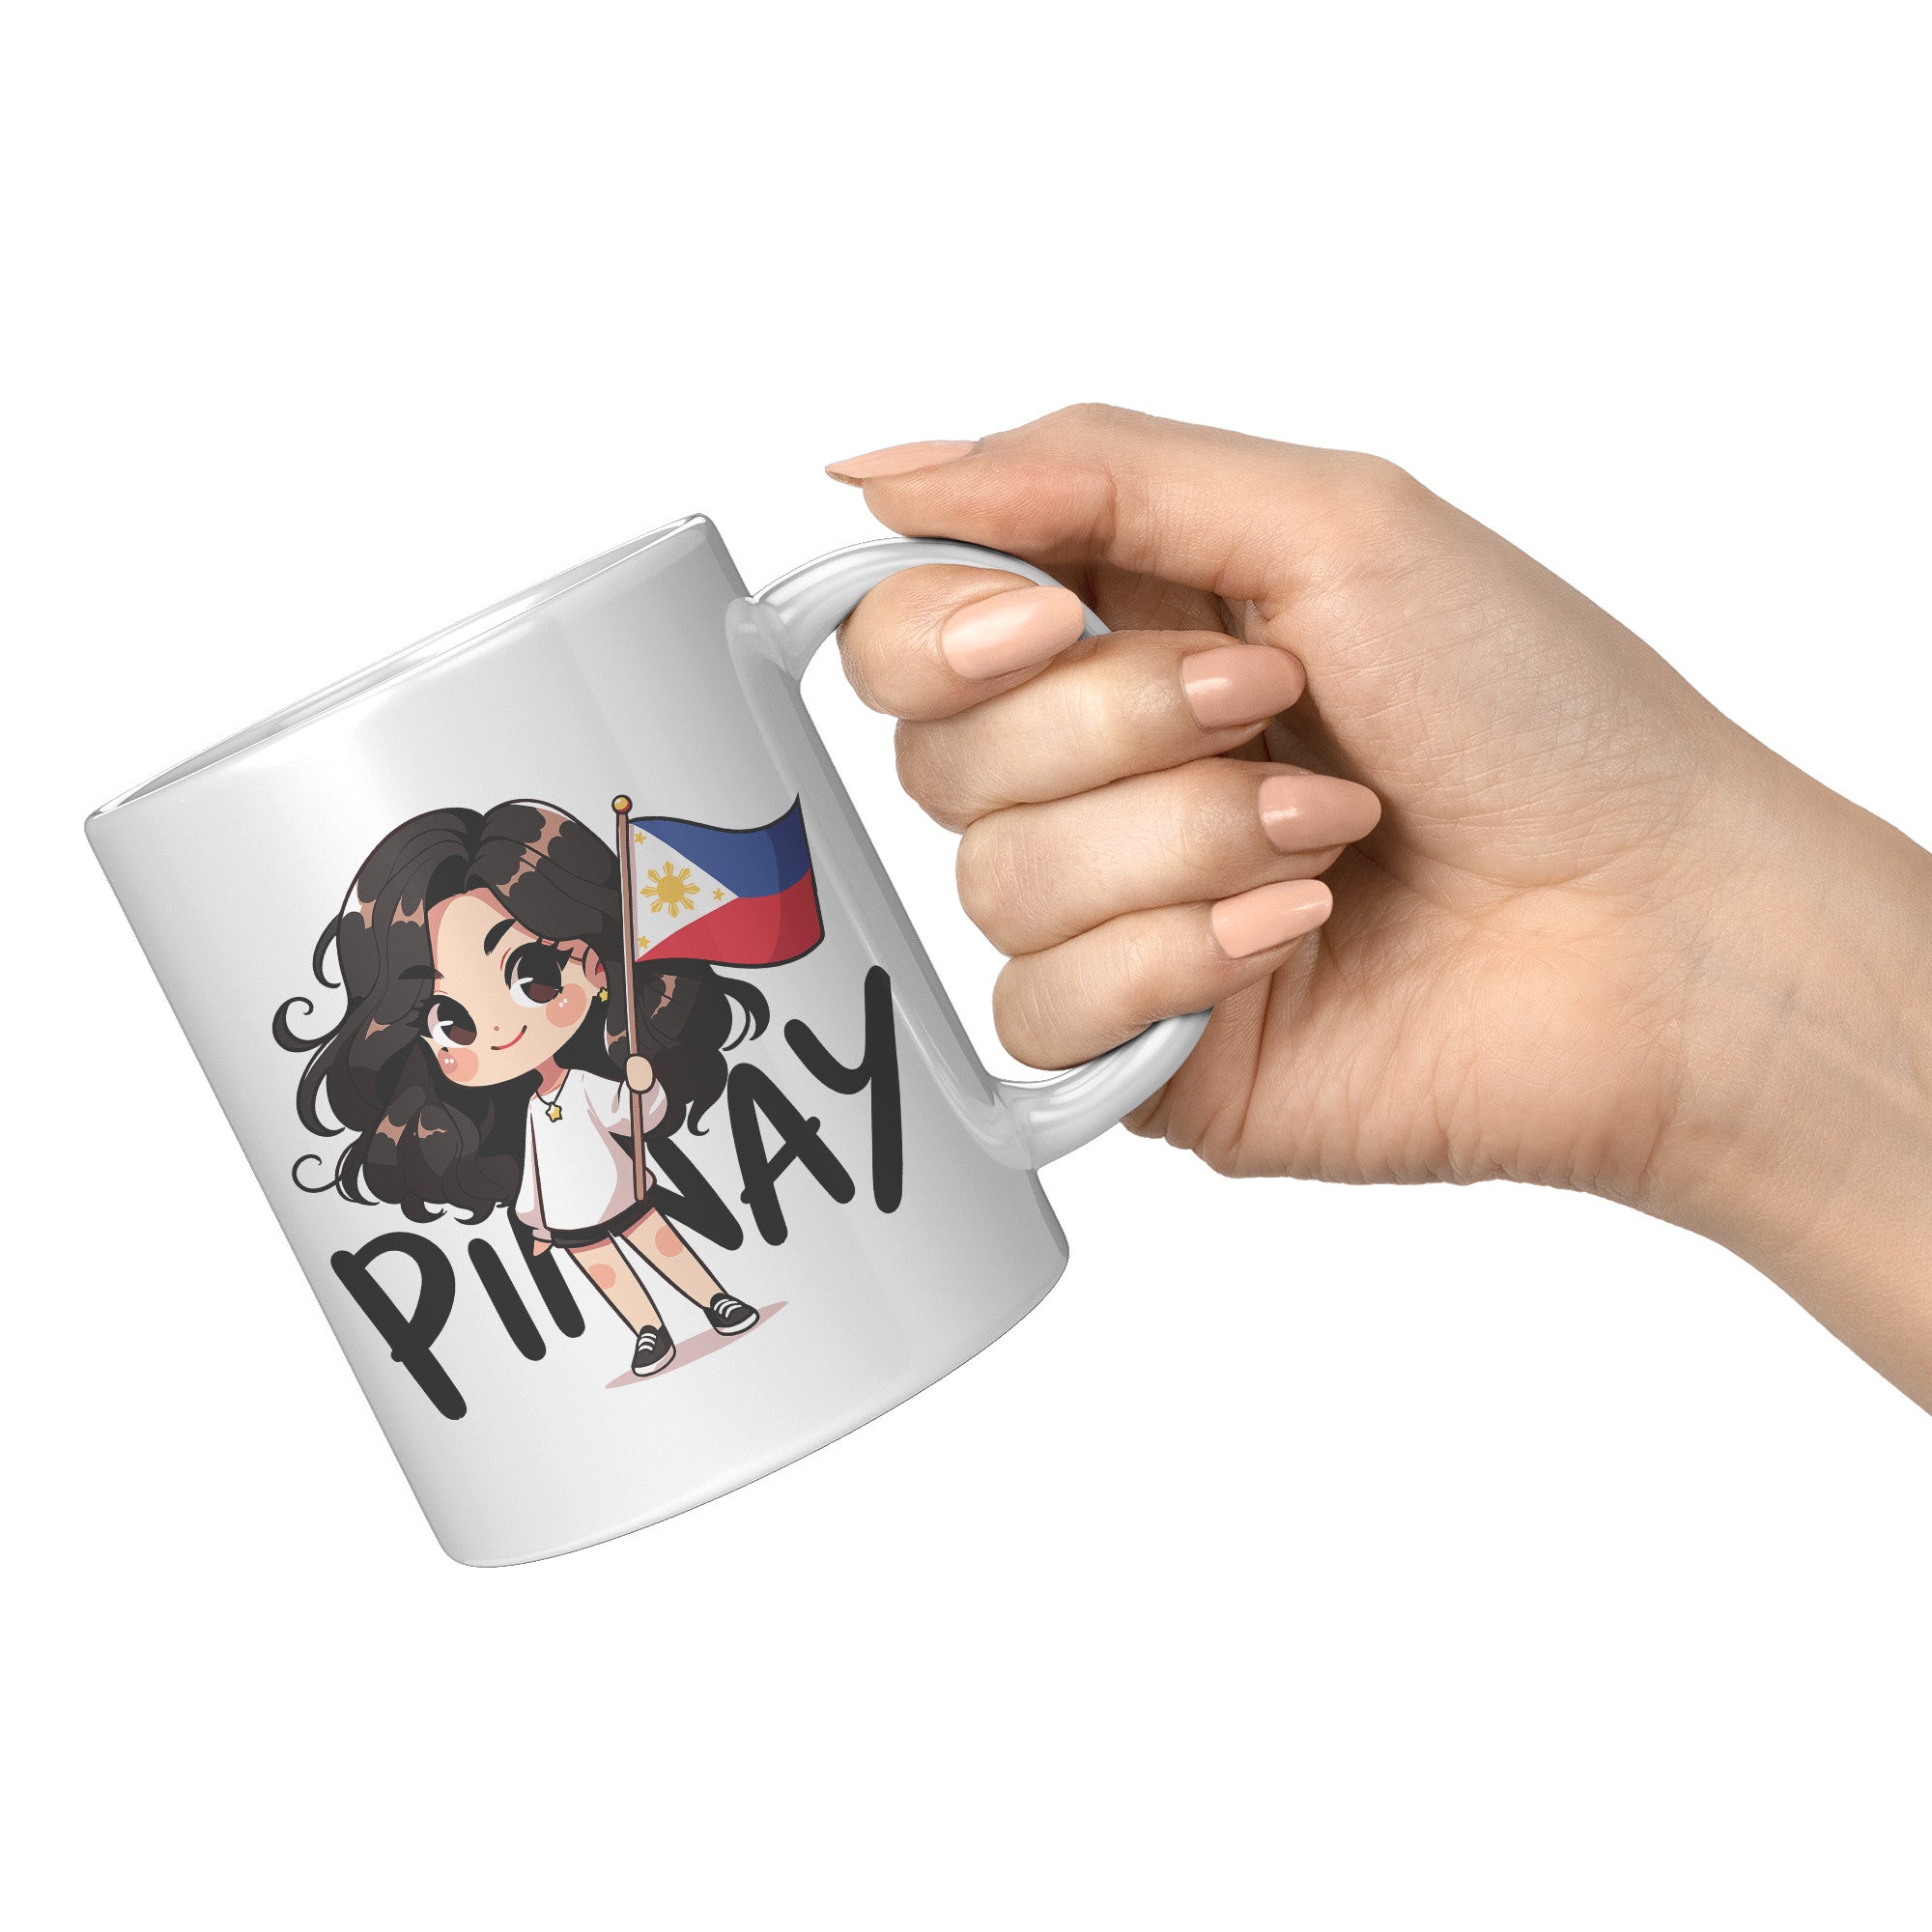 "Cute Cartoon Filipino Pride Coffee Mug - Vibrant Pinoy Pride Cup - Perfect Gift for Filipinos - Colorful Philippines Heritage Mug" - D